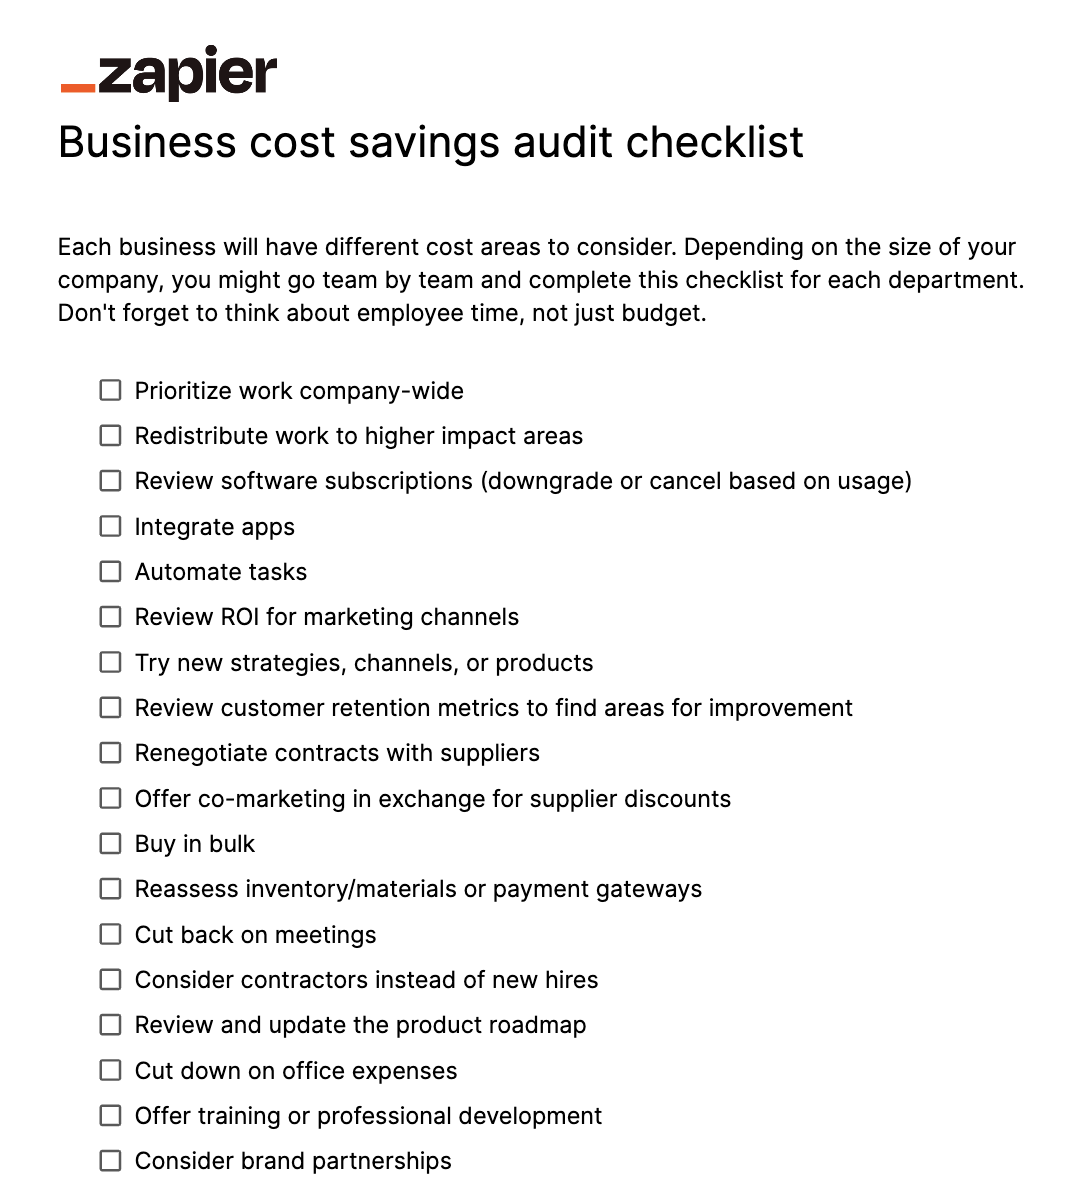 Business cost savings checklist